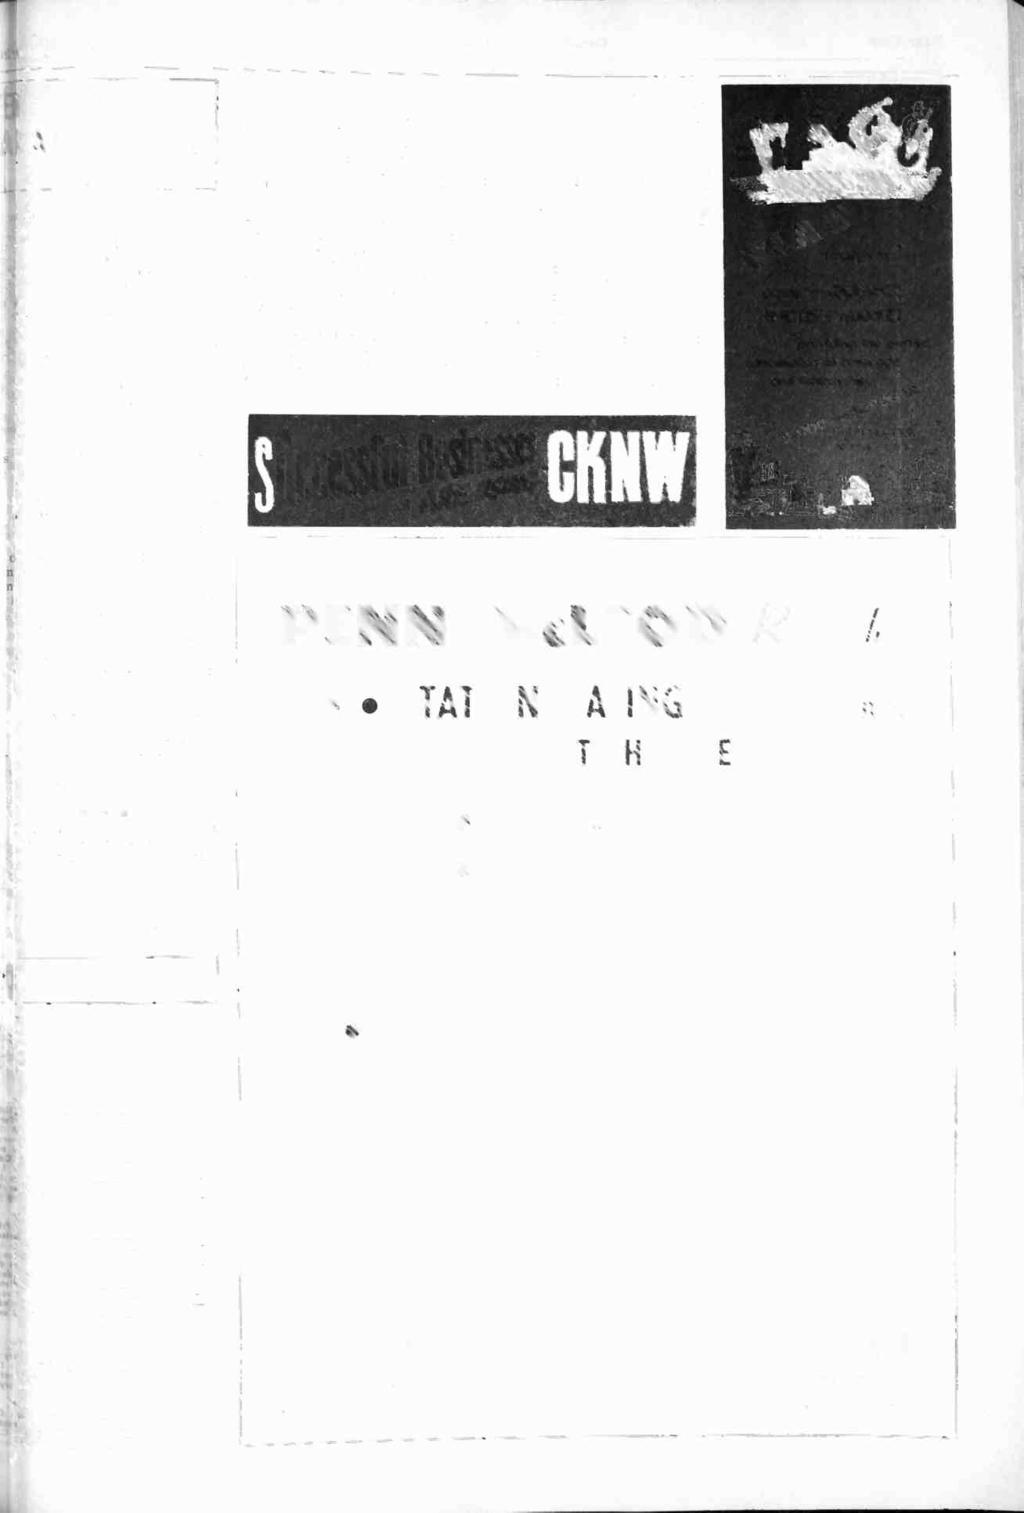 { will www.mericnrdiohistory.com Sdtember 27th, 1950 Cndin Brodcster & Telescreen Pge Three IEW YO